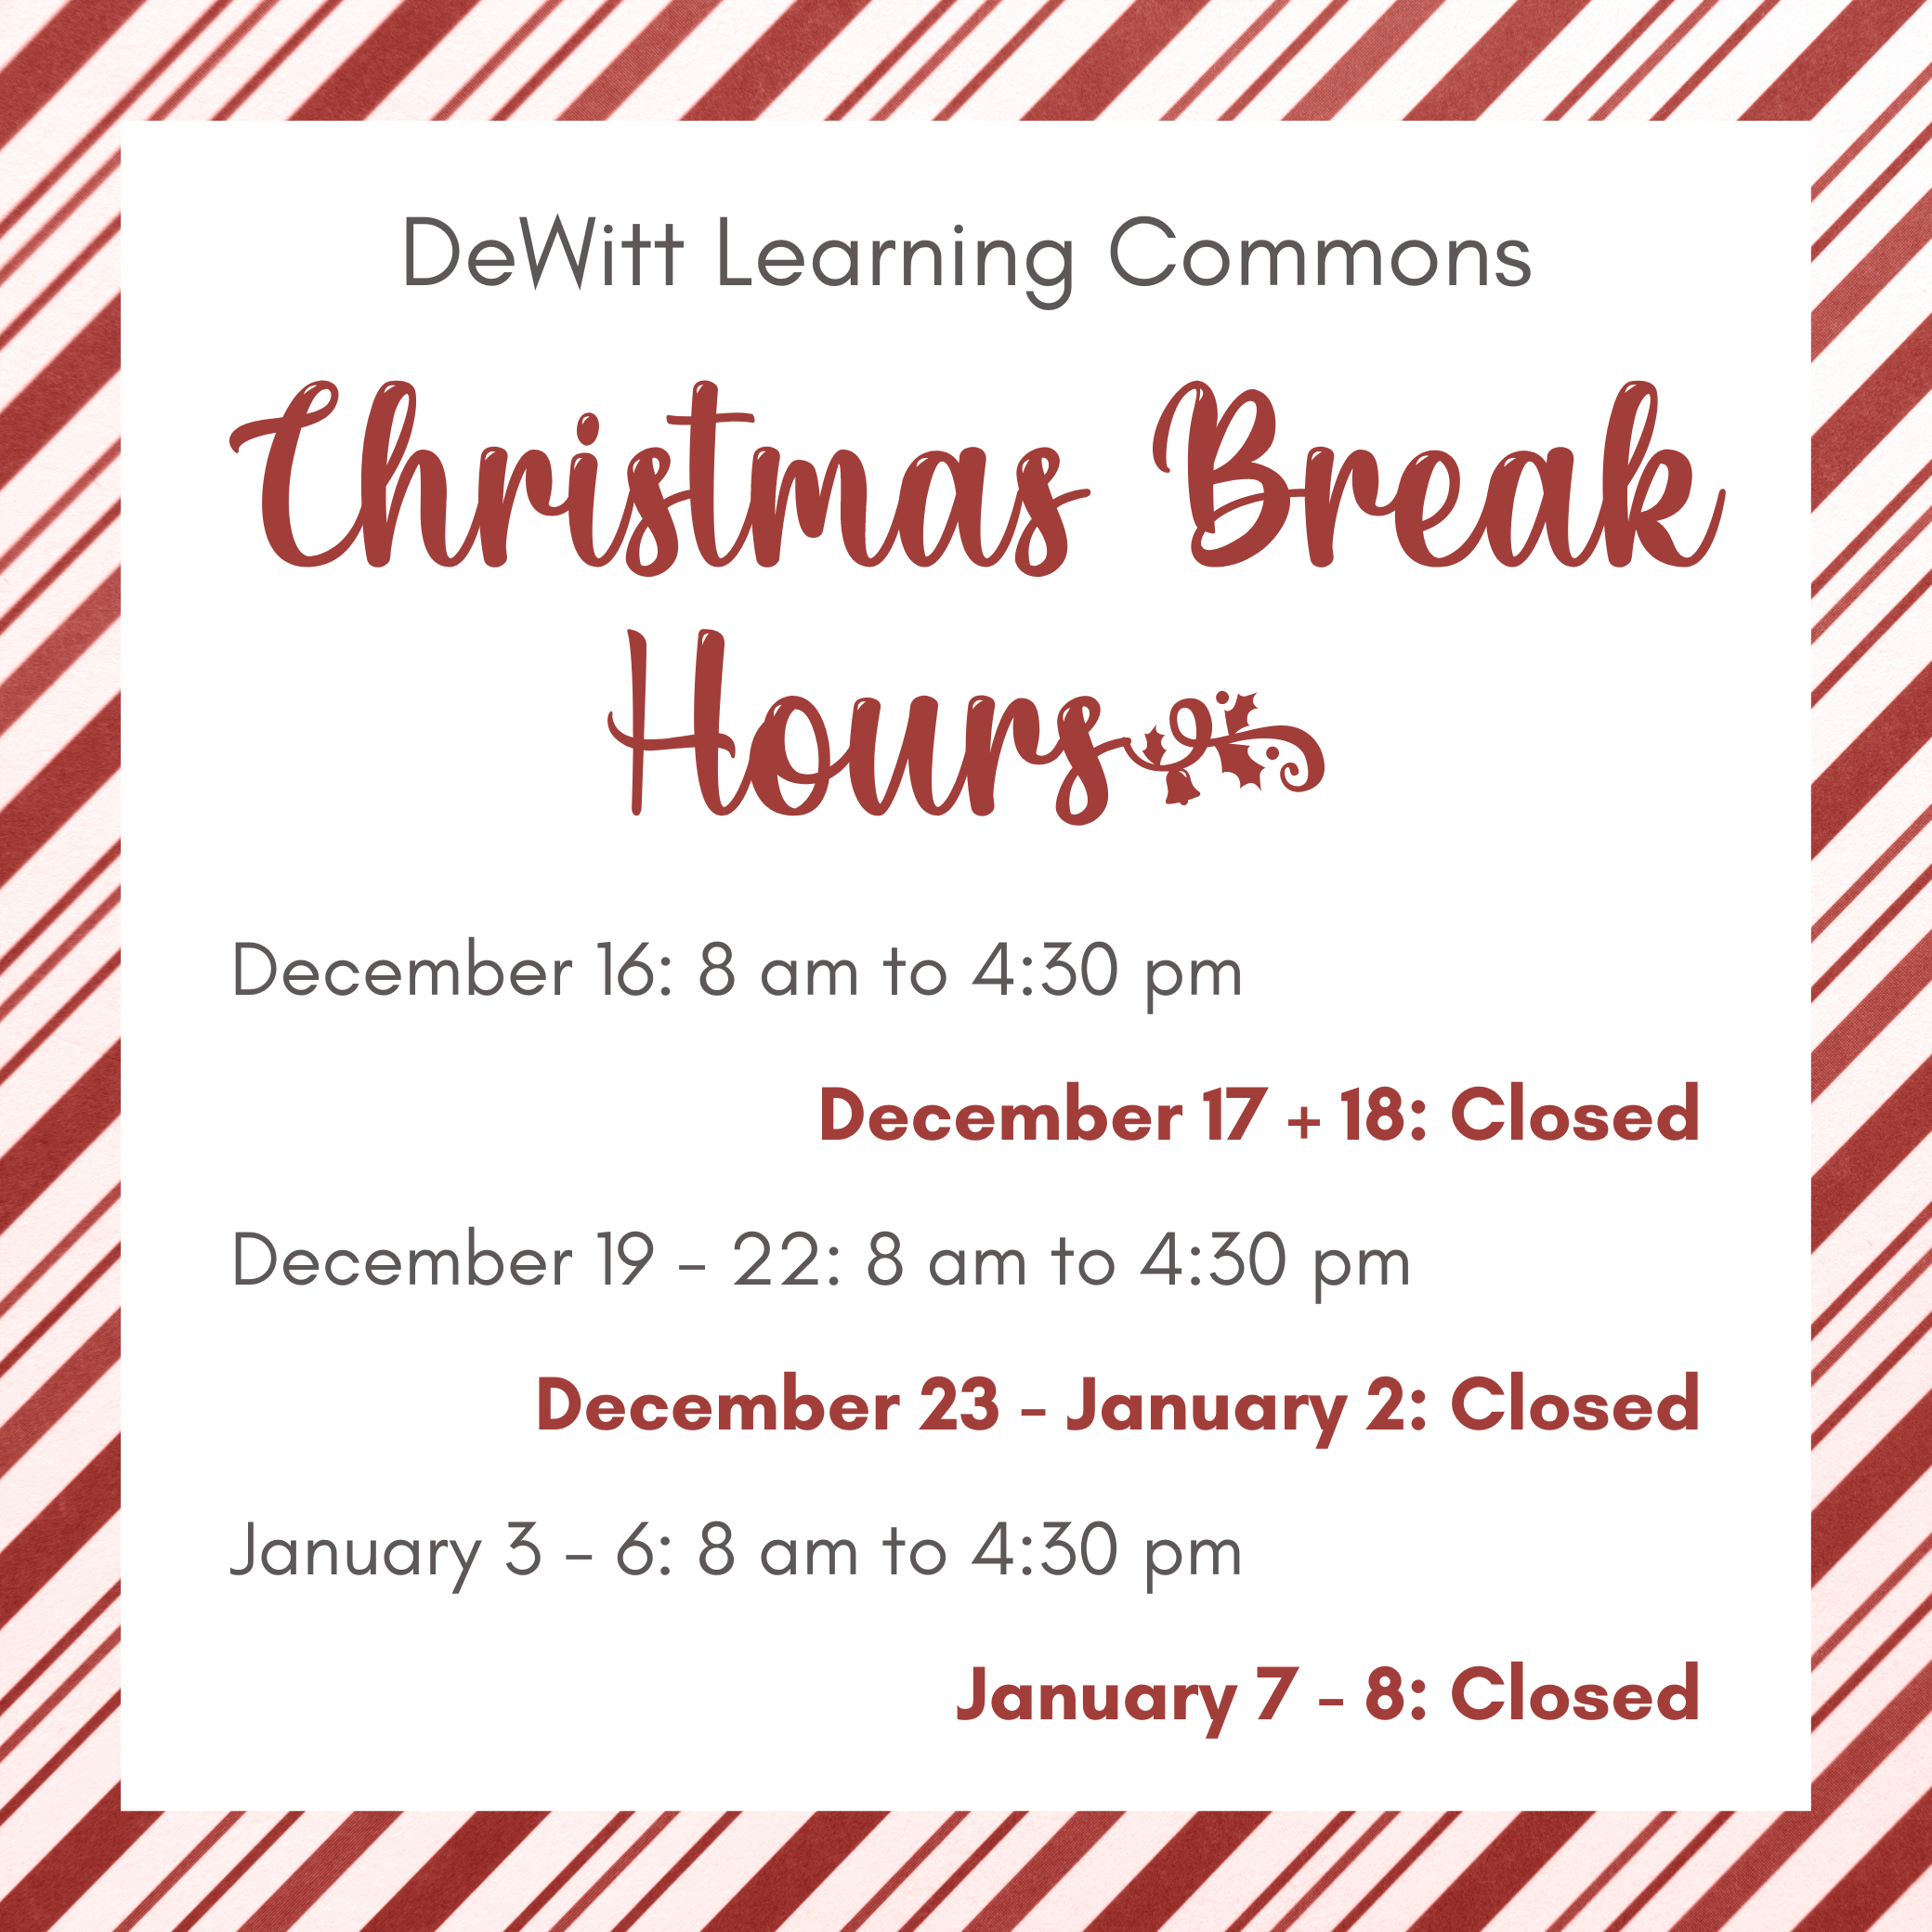 DeWitt Learning Commons Christmas Break Hours: Dec. 16: 8 am to 4:30 pm; Dec. 17 + 18: Closed; Dec. 19 - 22: 8 am to 4:30 pm; Dec. 23 - Jan. 2: Closed; Jan. 3 - 6: 8 am to 4:30 pm; Jan. 7 - 8: Closed.